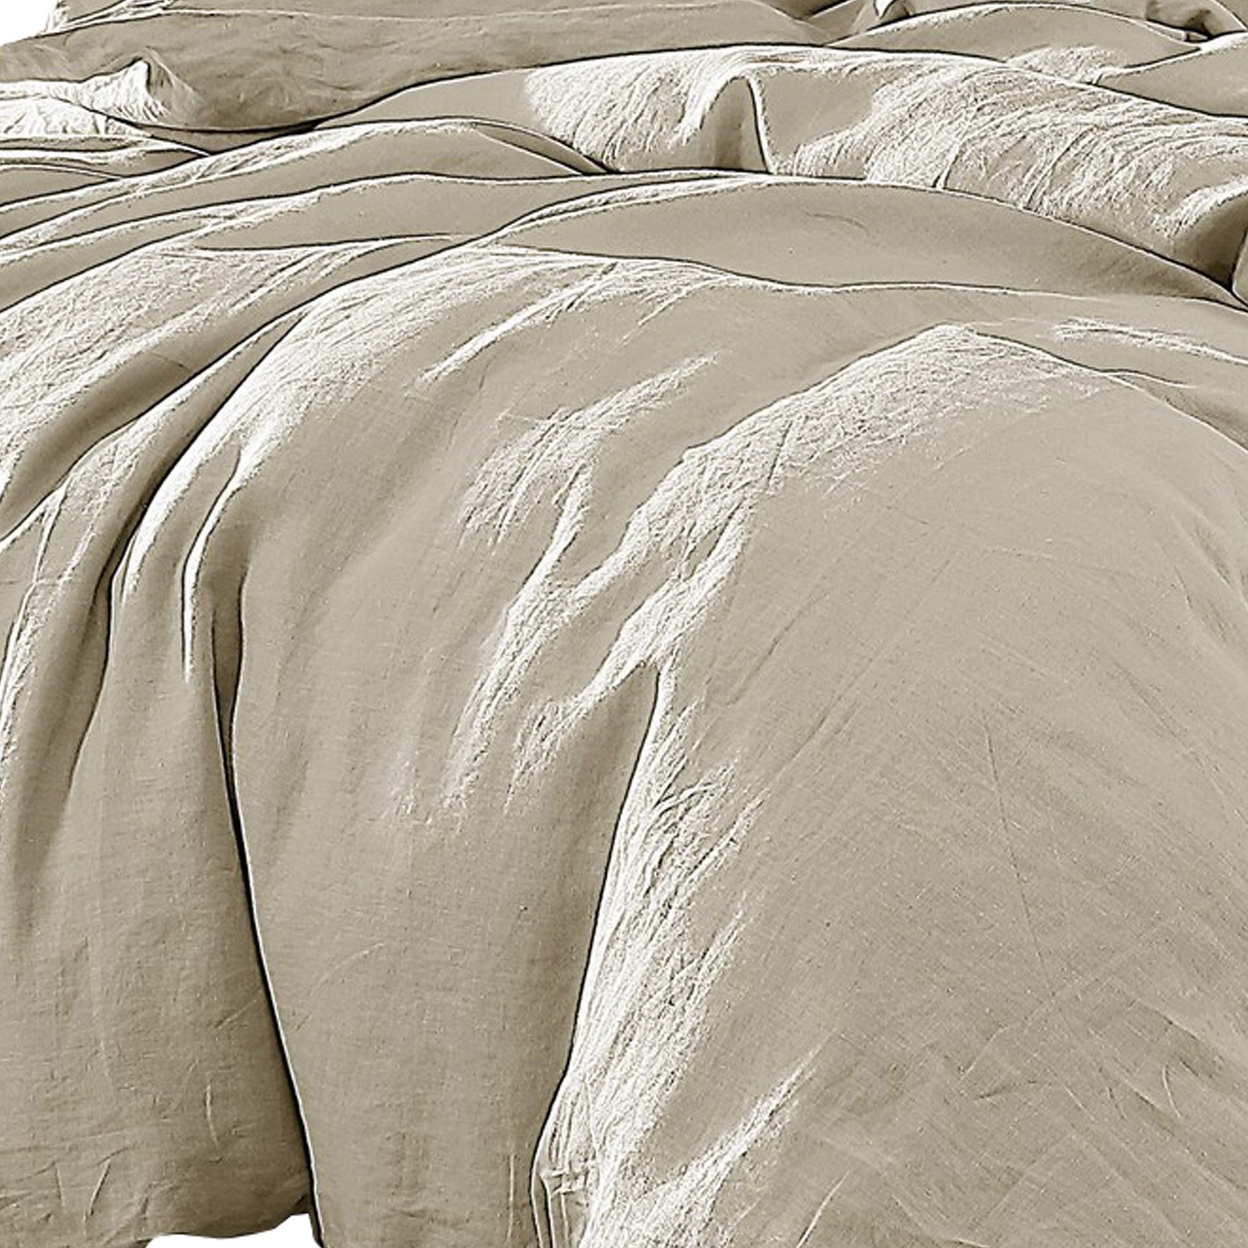 Edge 4 Piece King Size Duvet Comforter Set, Washed Linen, Oatmeal Beige - Saltoro Sherpi